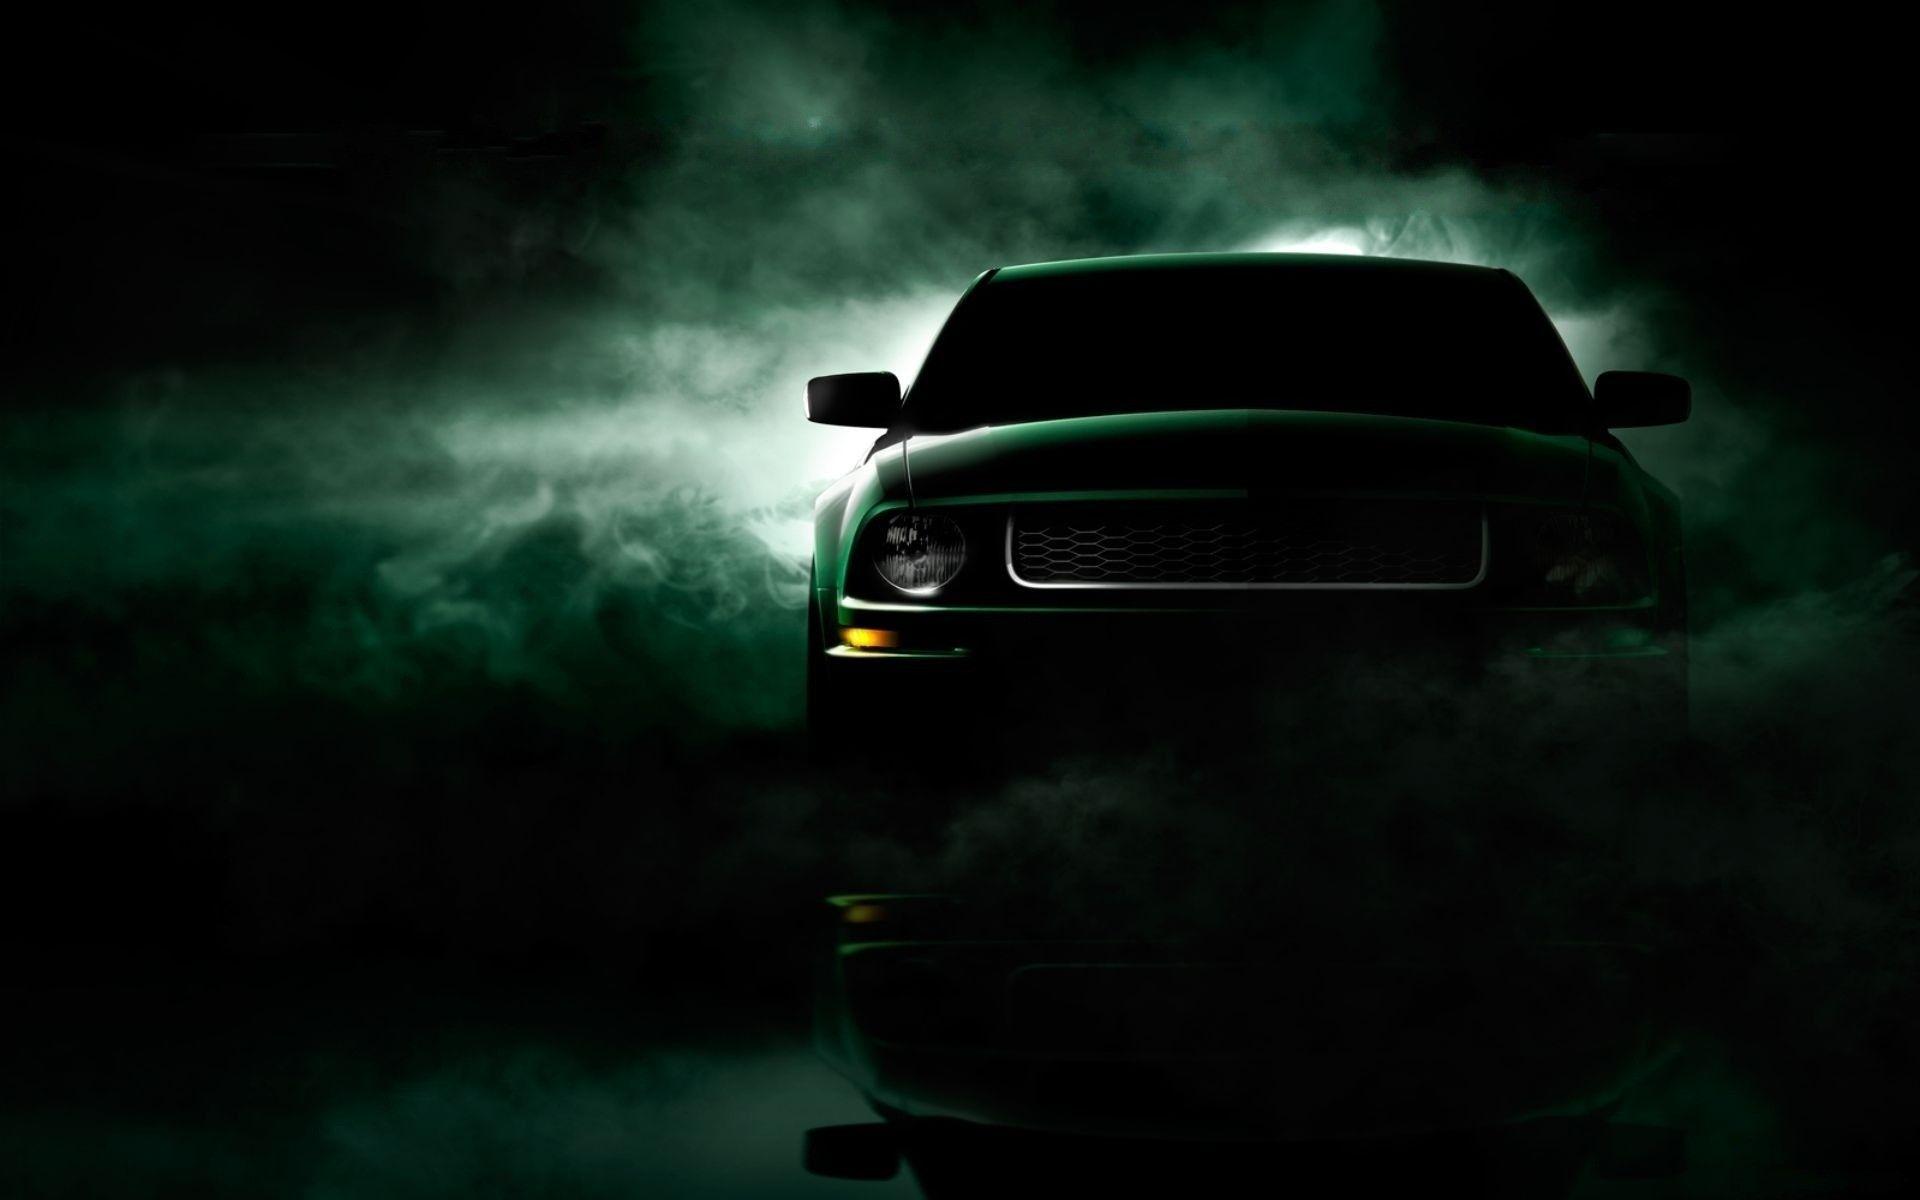 Машина фон для гачи. Ford Mustang. Ford Mustang Dark. Форд Мустанг черная с зелёными фарами. Авто на темном фоне.